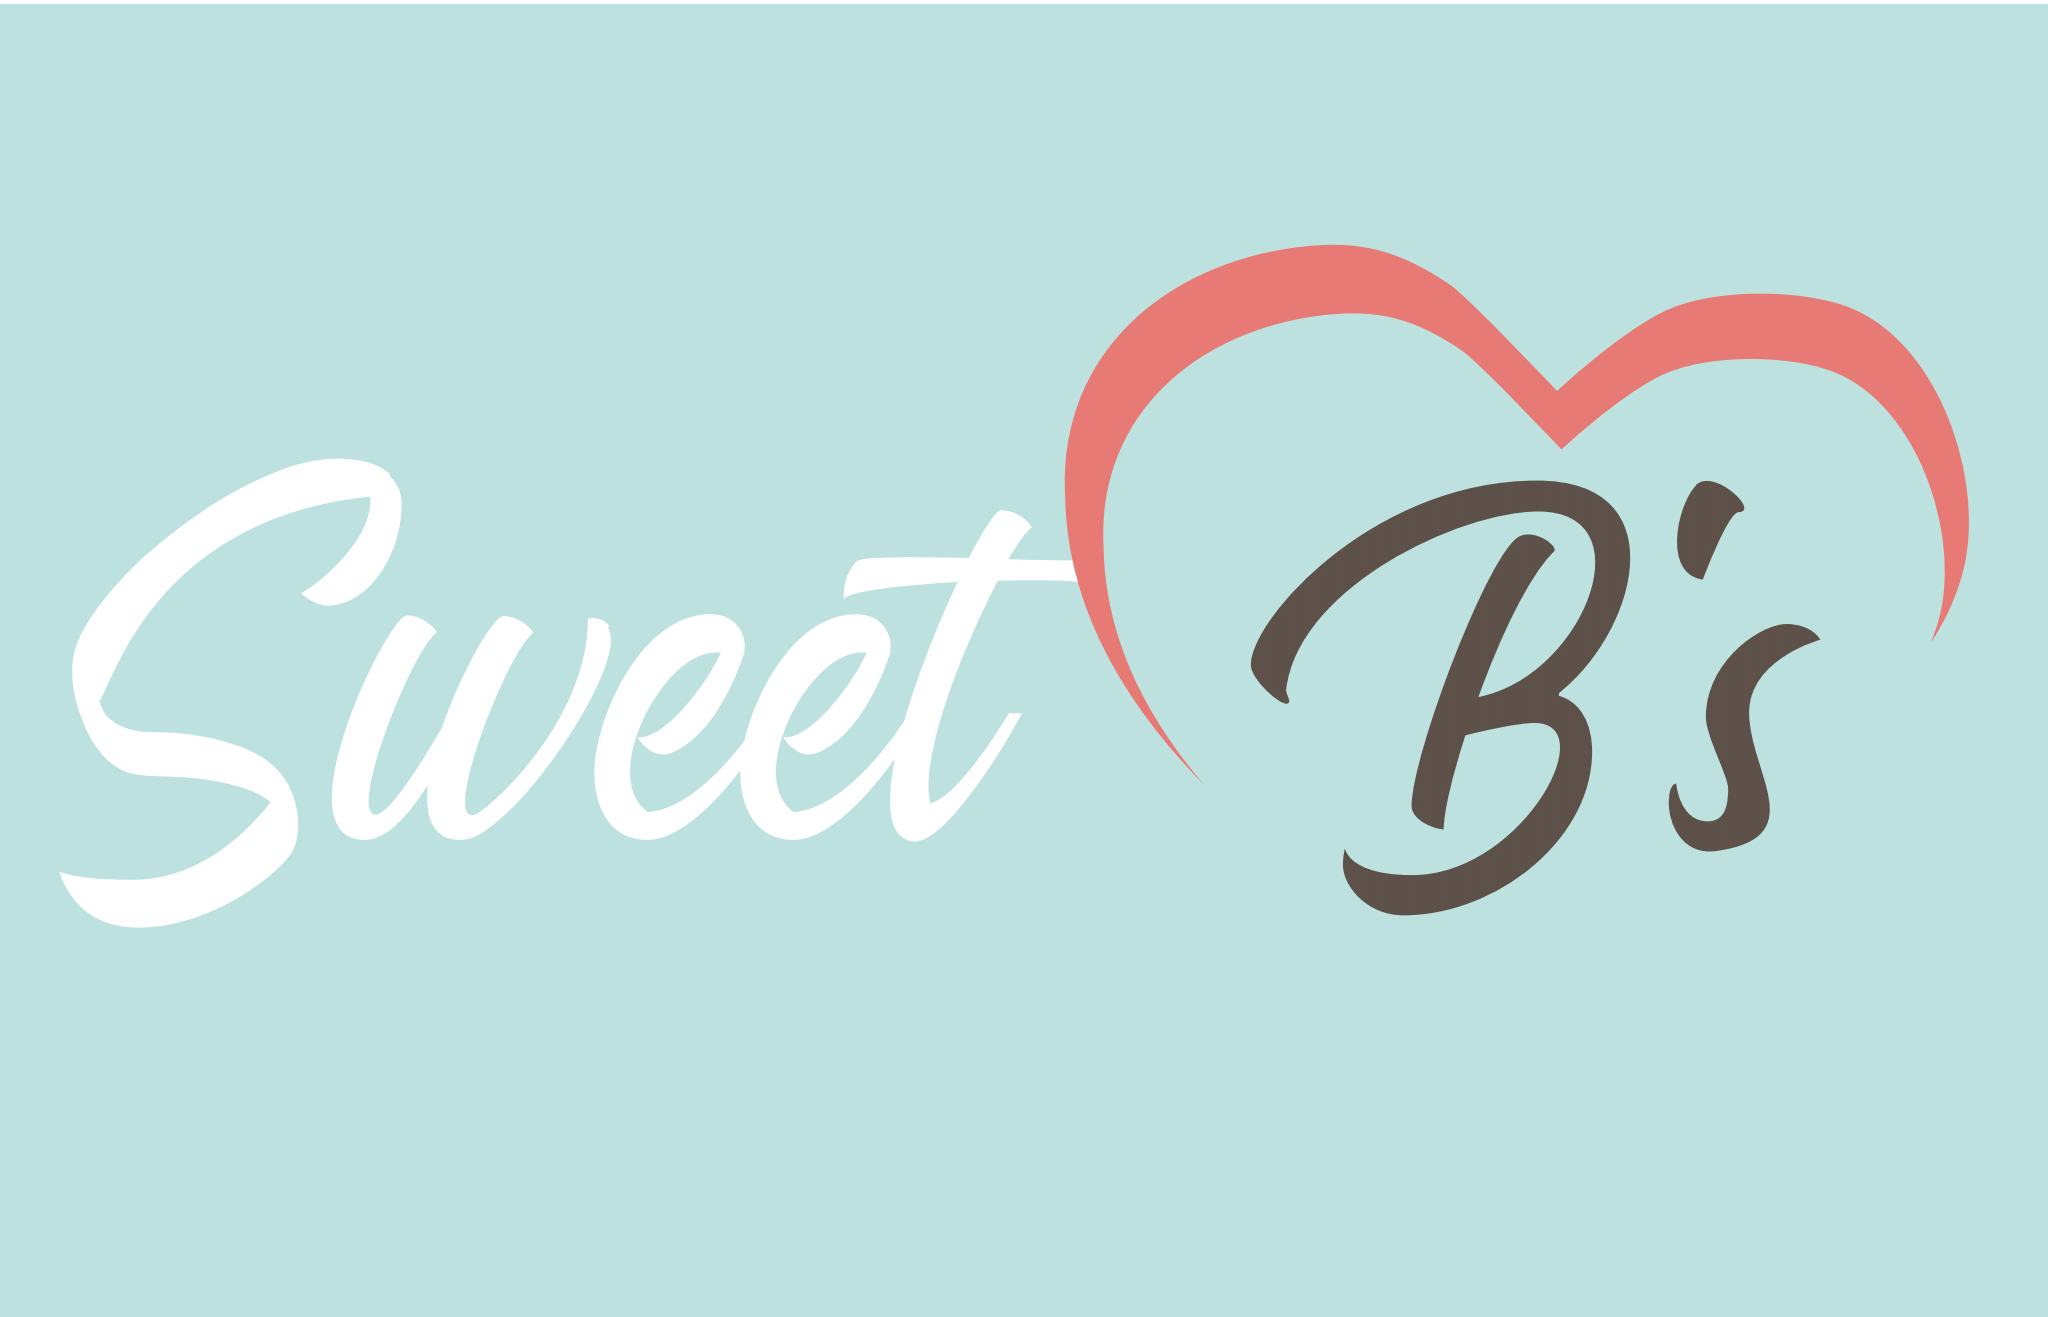 Sweet B’s Baked Love